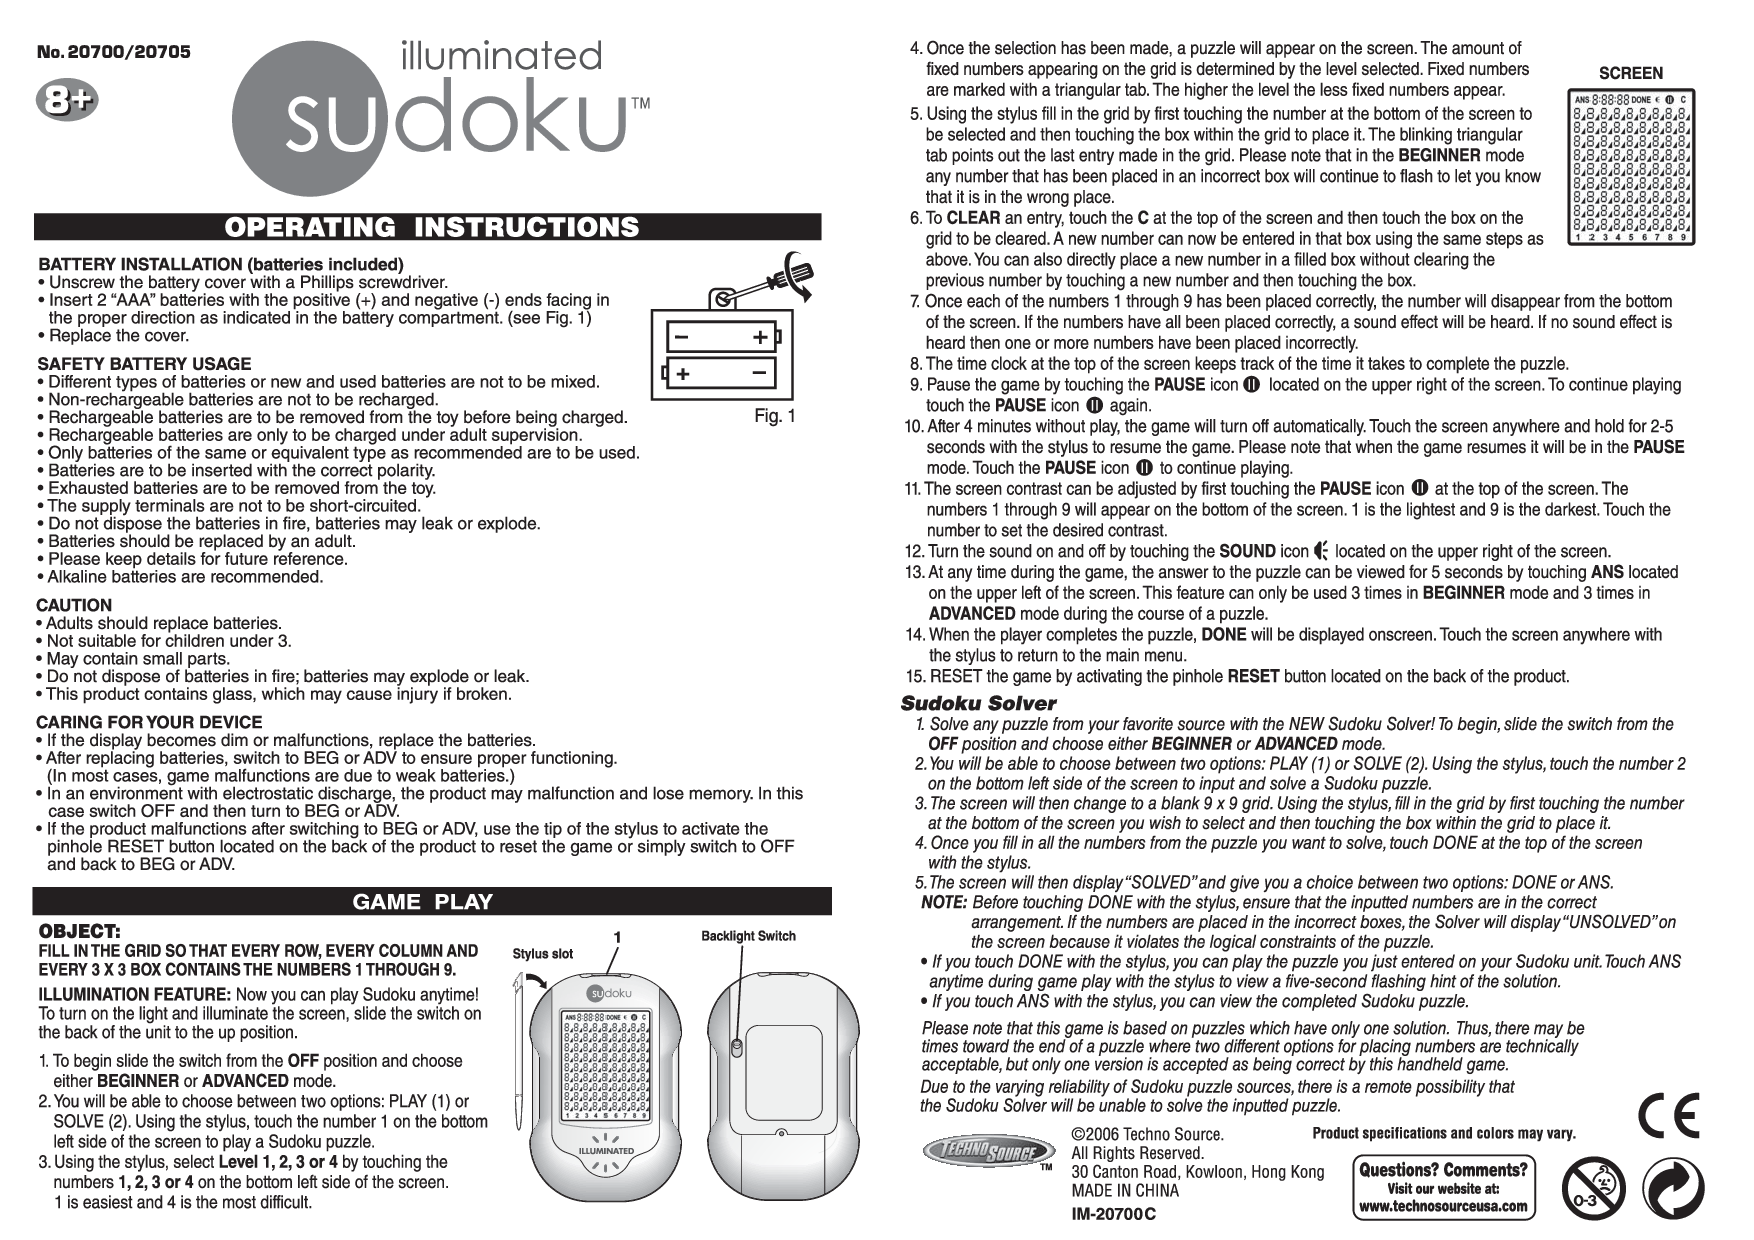 Techno Source Illuminated Sudoku User Manual